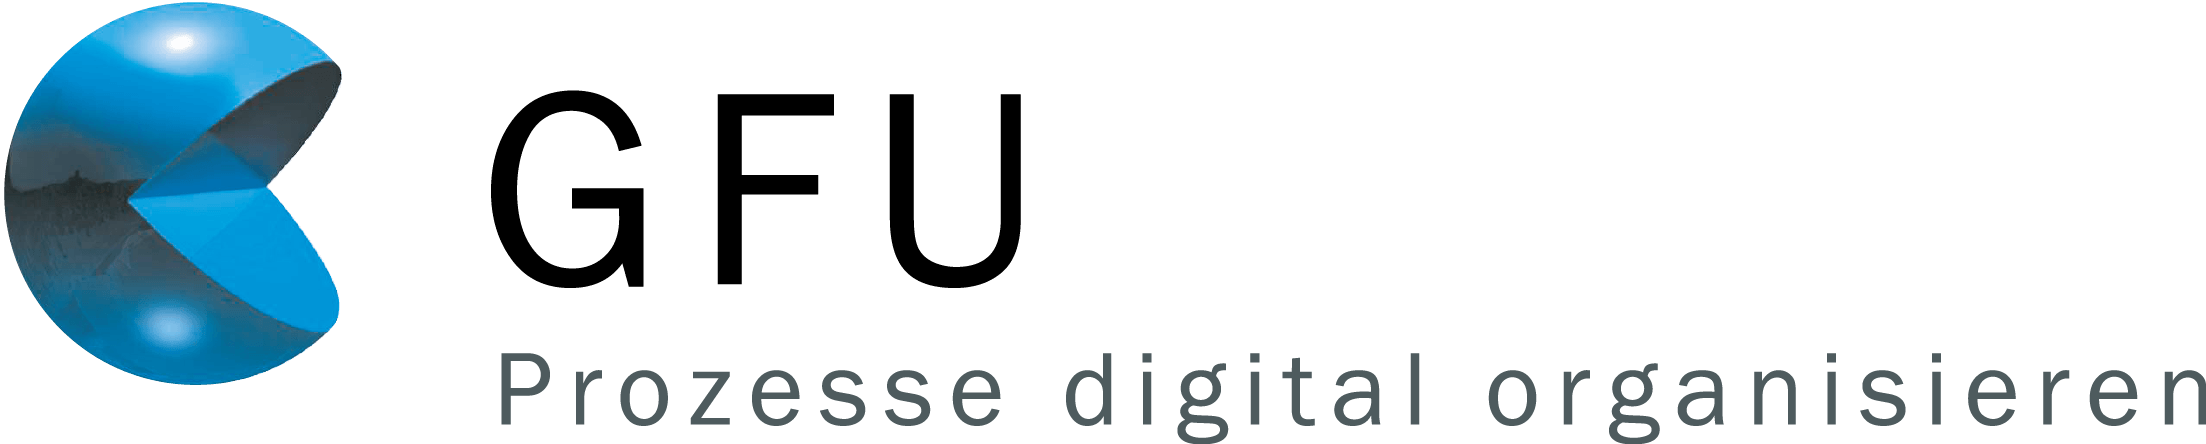 Gfu Logo - GFU GmbH digital organisieren